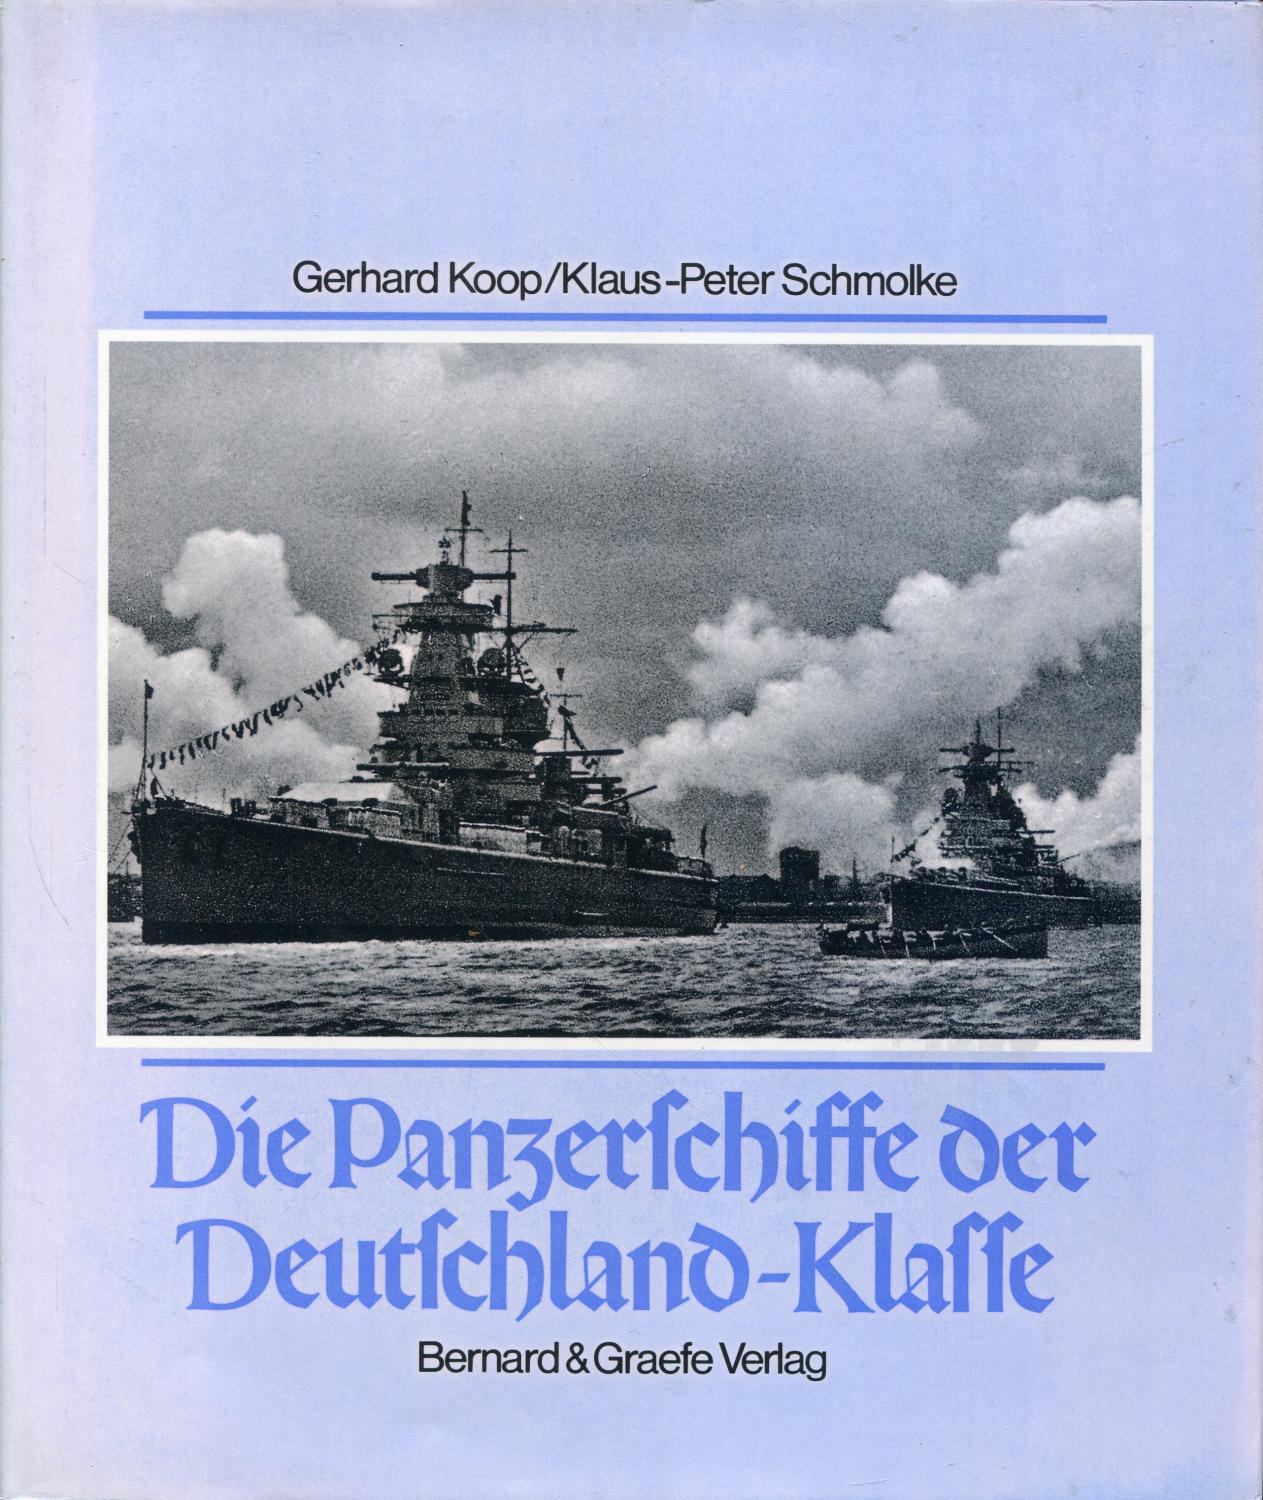 Die Panzerschiffe der Deutschland-Klasse - Gerhard Koop - Klaus-Peter Schmolke